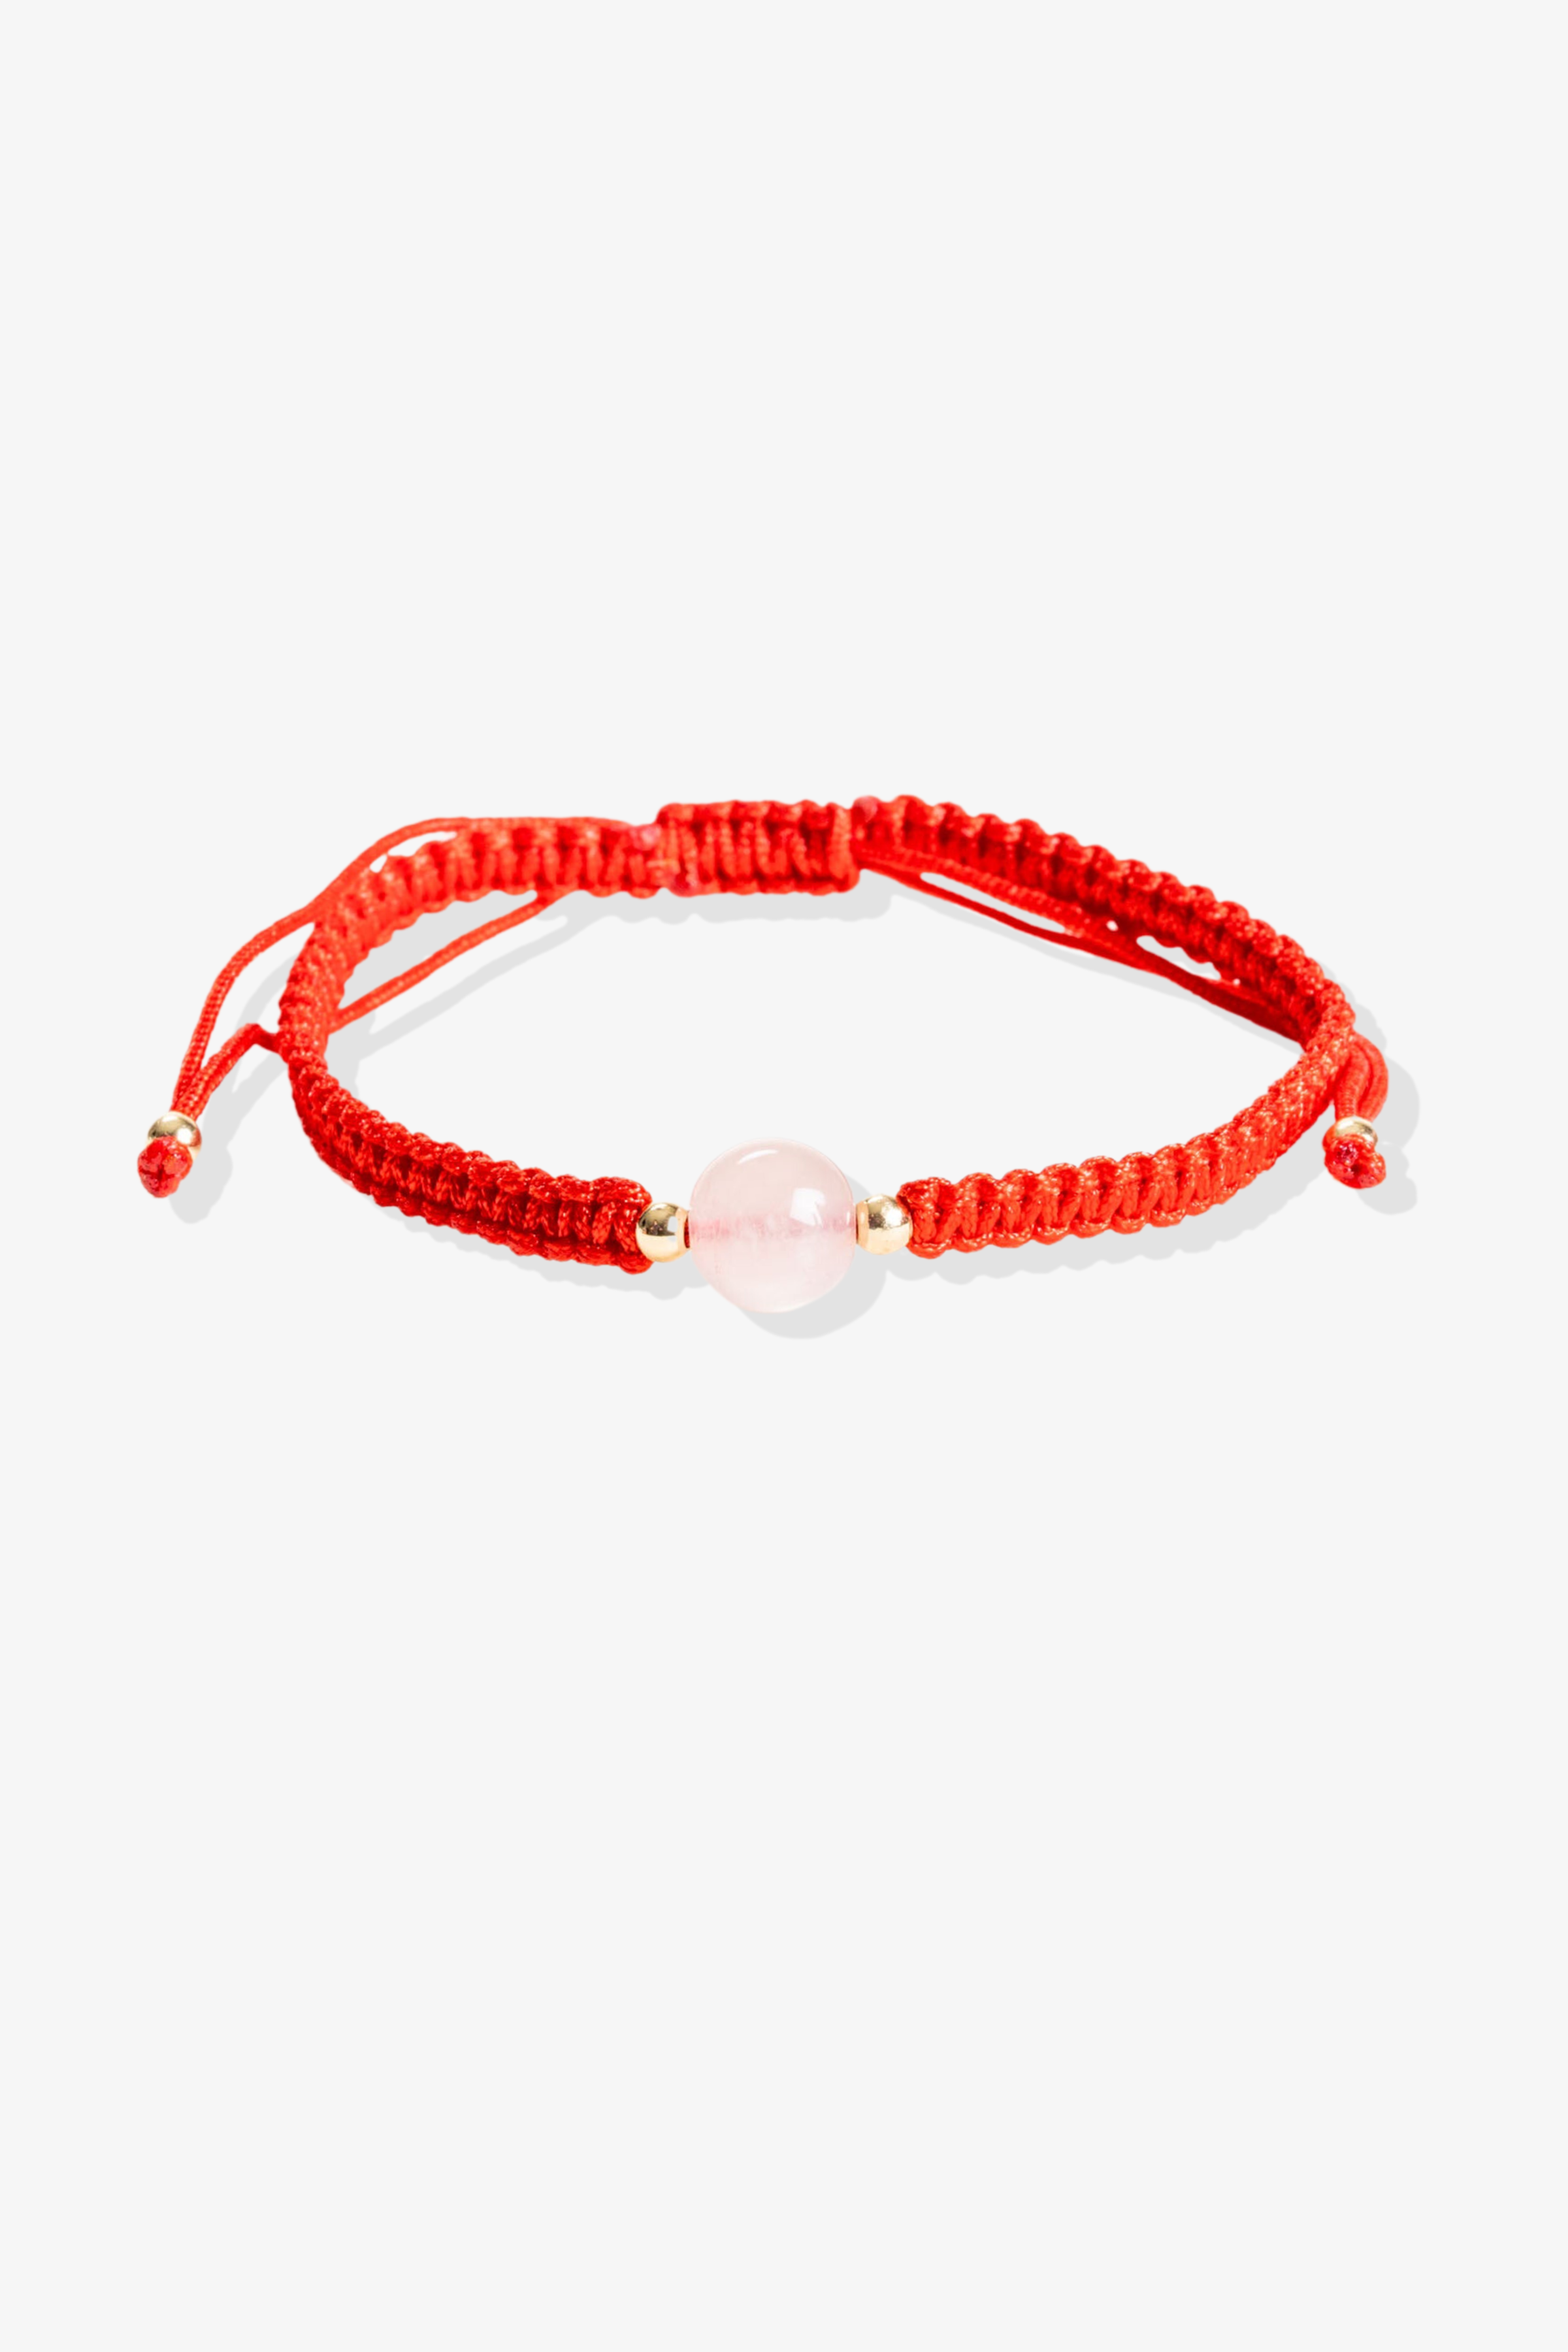 Capricorn Red Thread Gem Bracelet